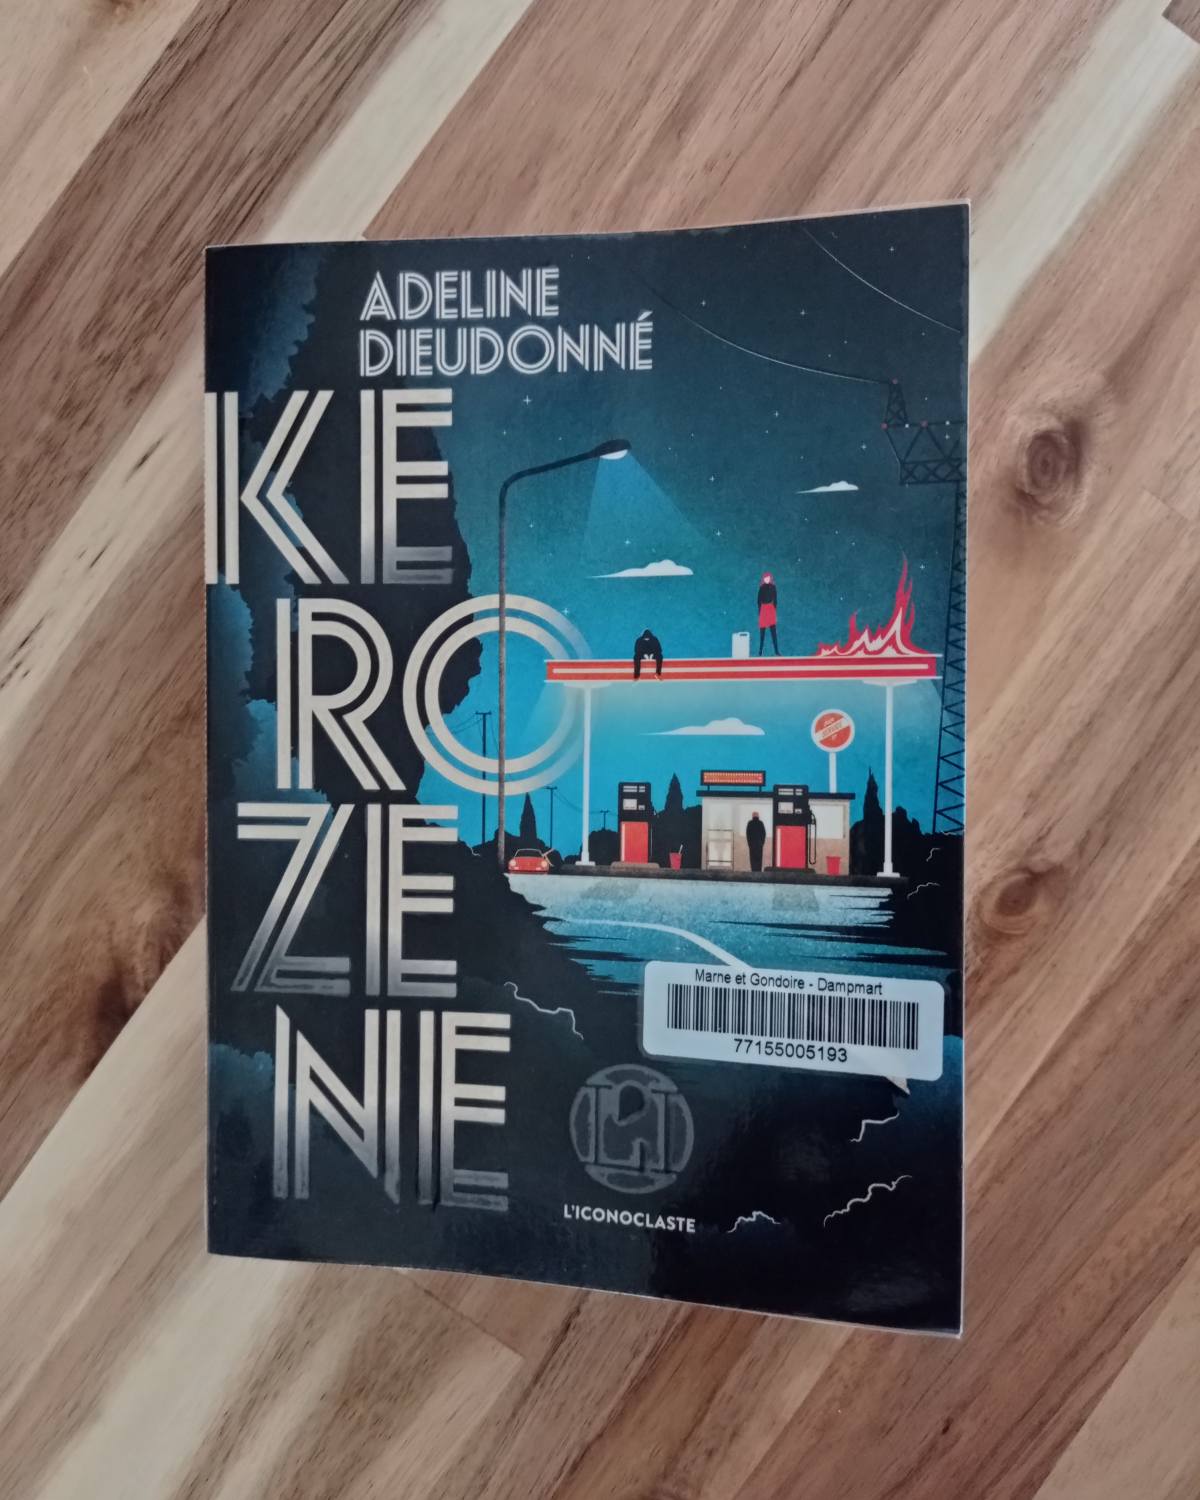 Kérozène / Adeline Dieudonné